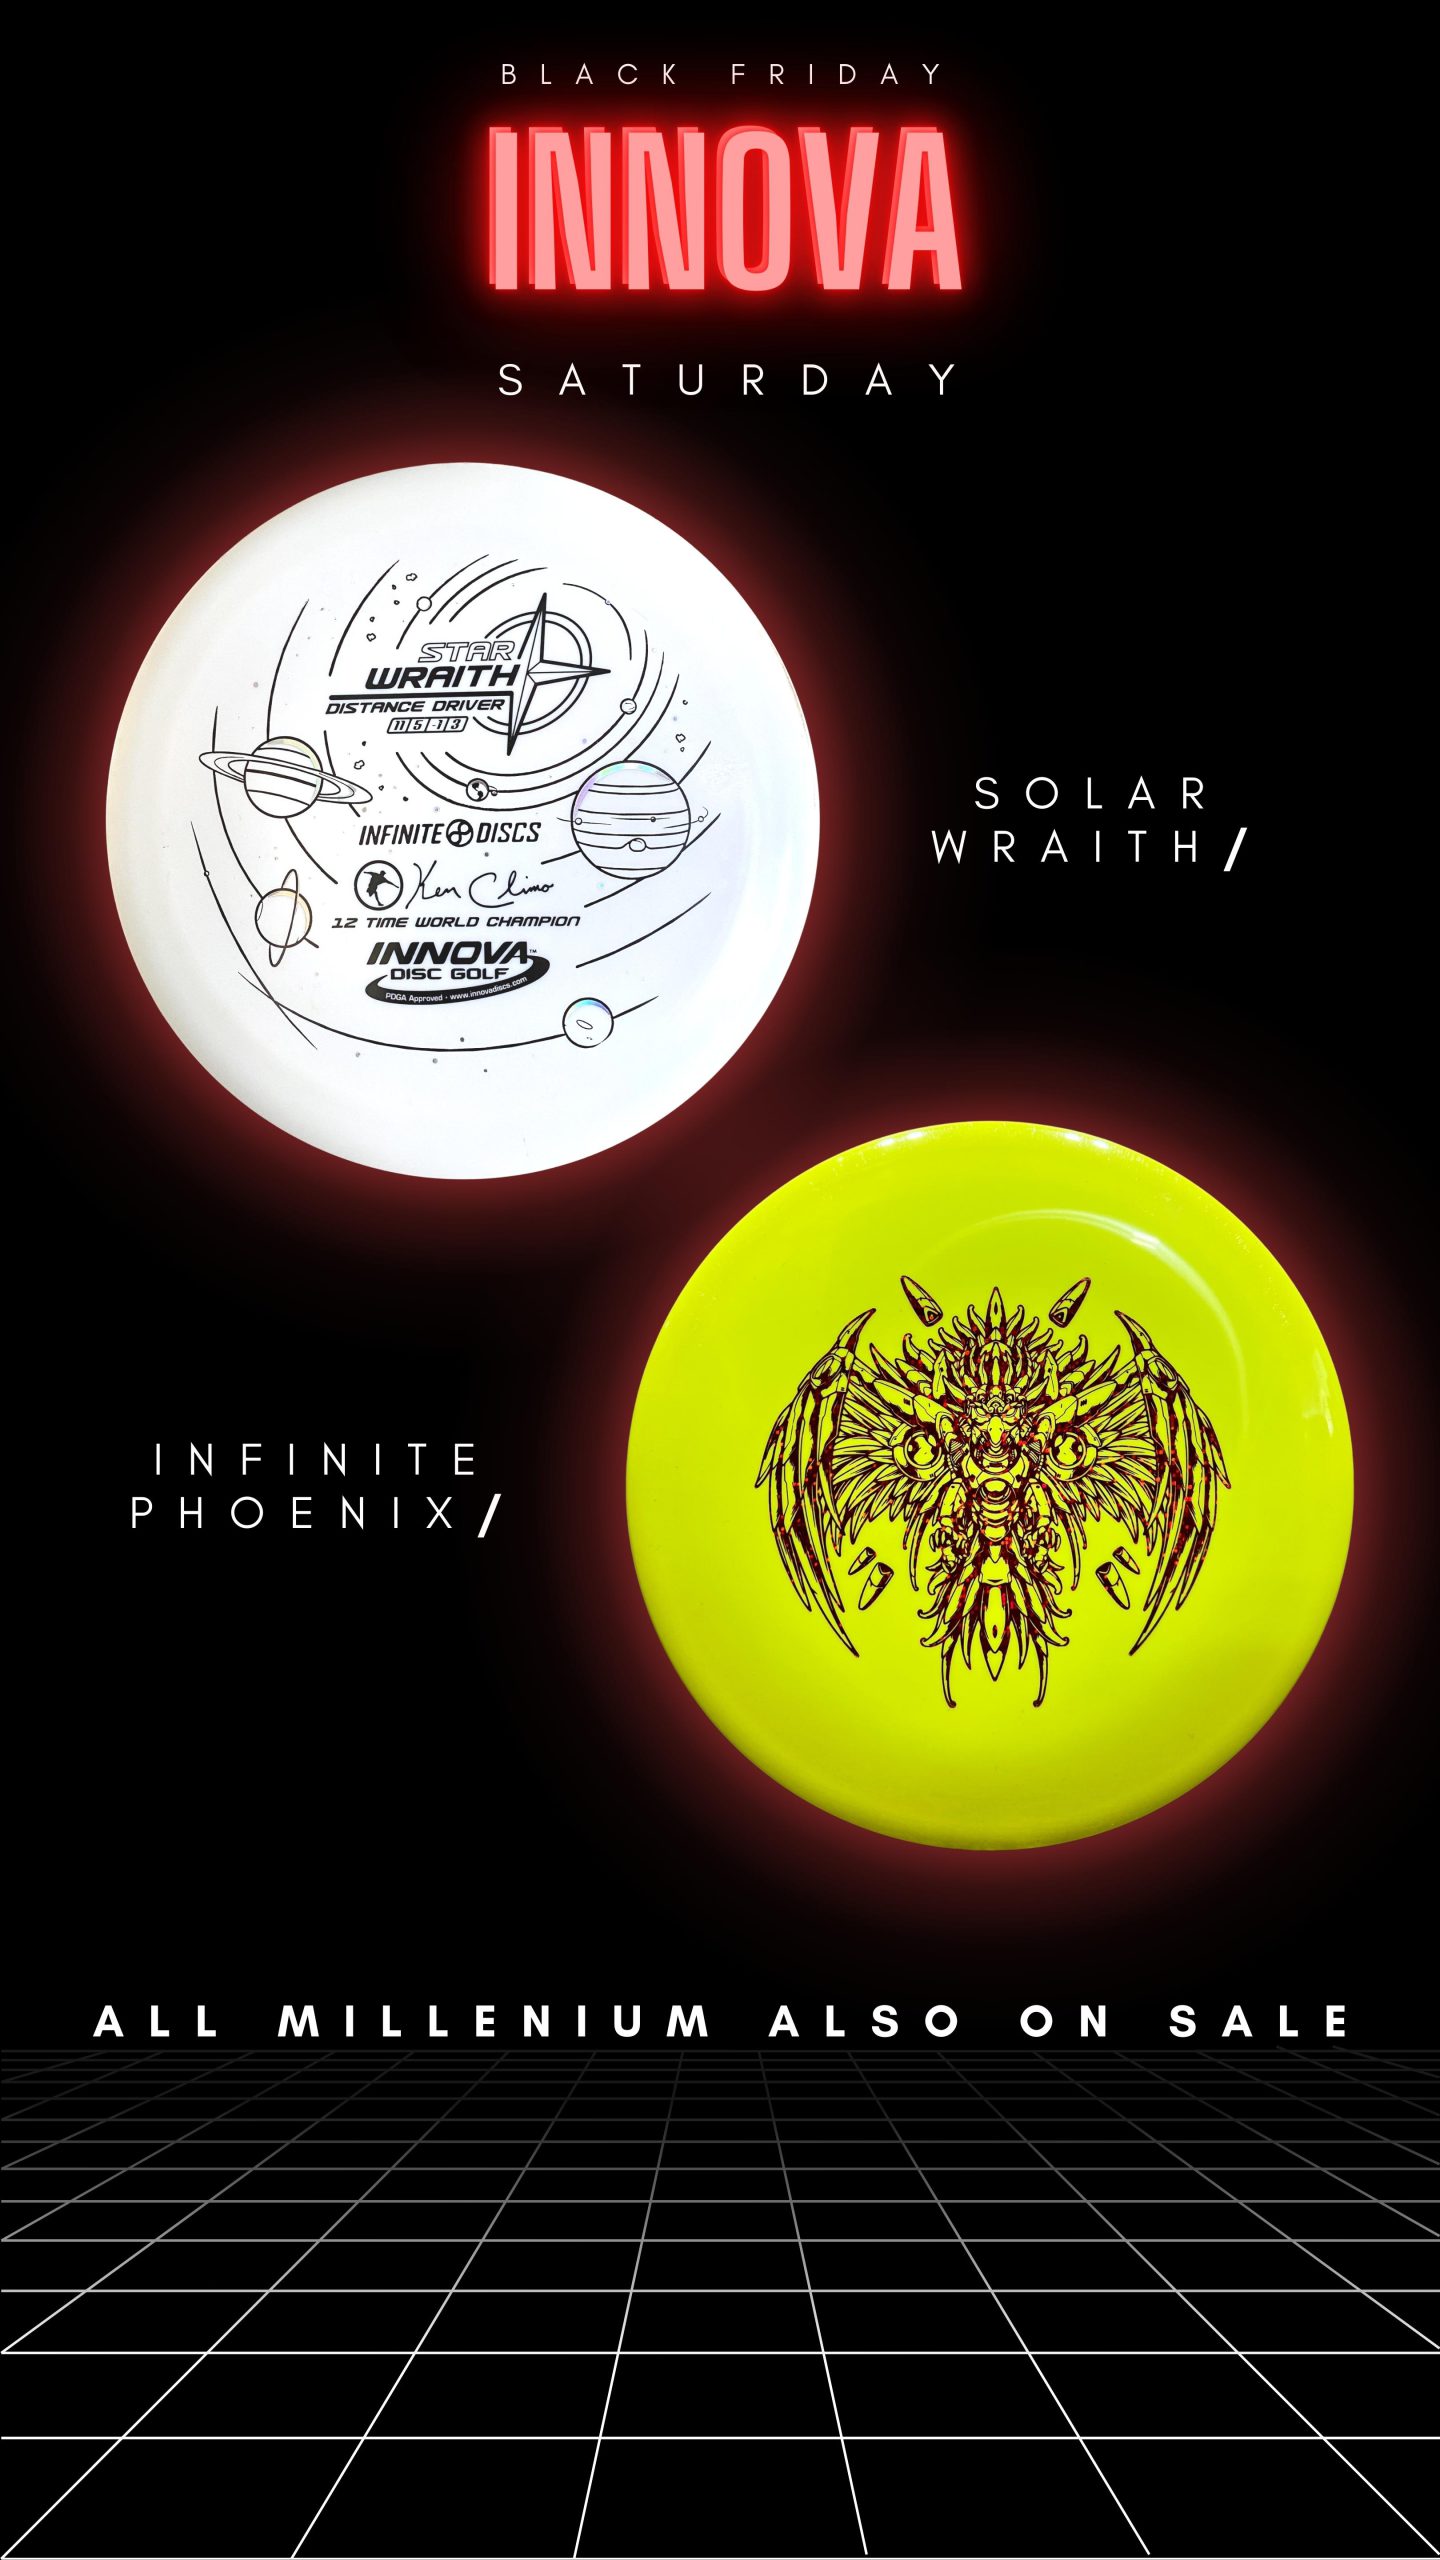 Innova Solar Wraith and limited edition Phoenix Stamp